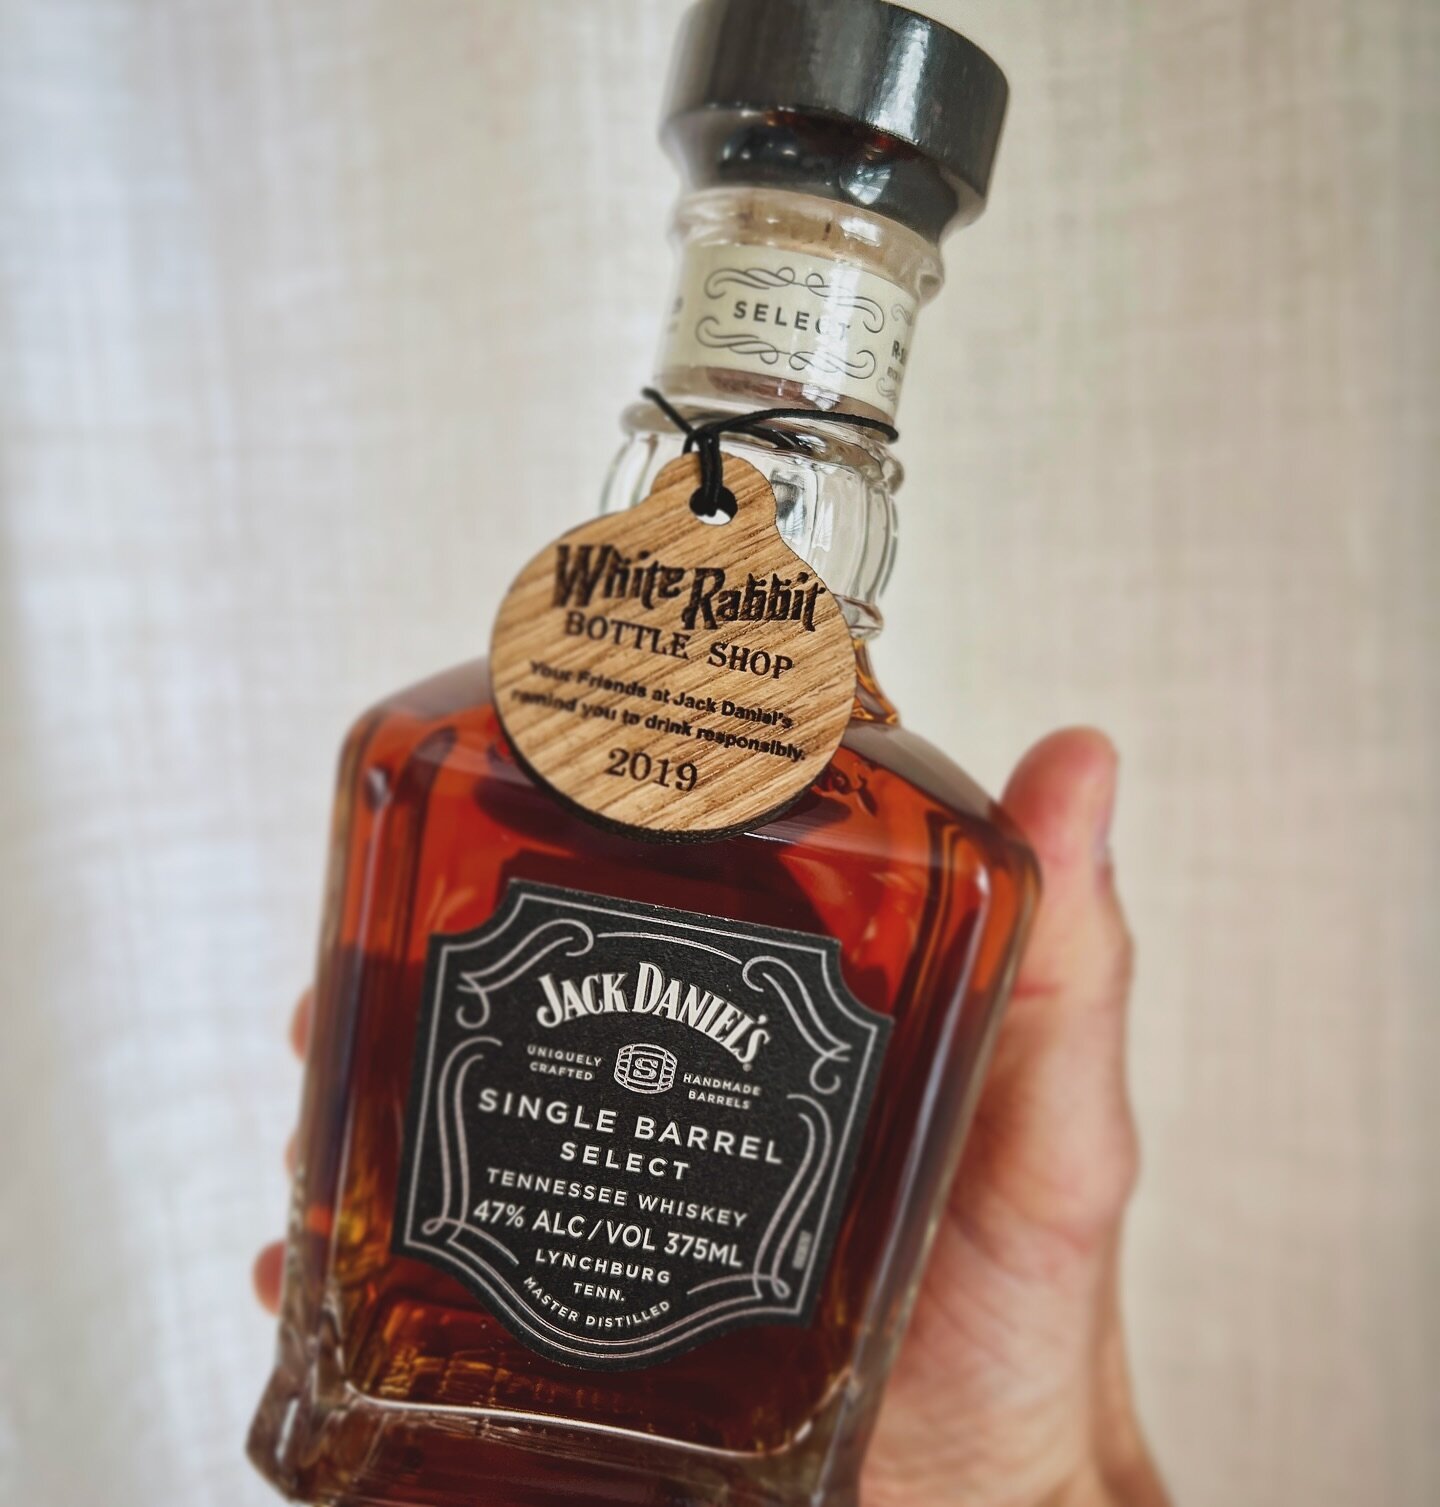 What are you drinking for International Whiskey Day?

#internationwhiskeyday
#internationalwhiskyday
#whiskey
#TNWhiskey
#TennesseeWhiskey
#TennesseeWhiskeyTours
#TennesseeWhiskyTours
#whisky
#whiskeyorwhisky
#nashville
#nashvilletn 
#tennessee 
#ten